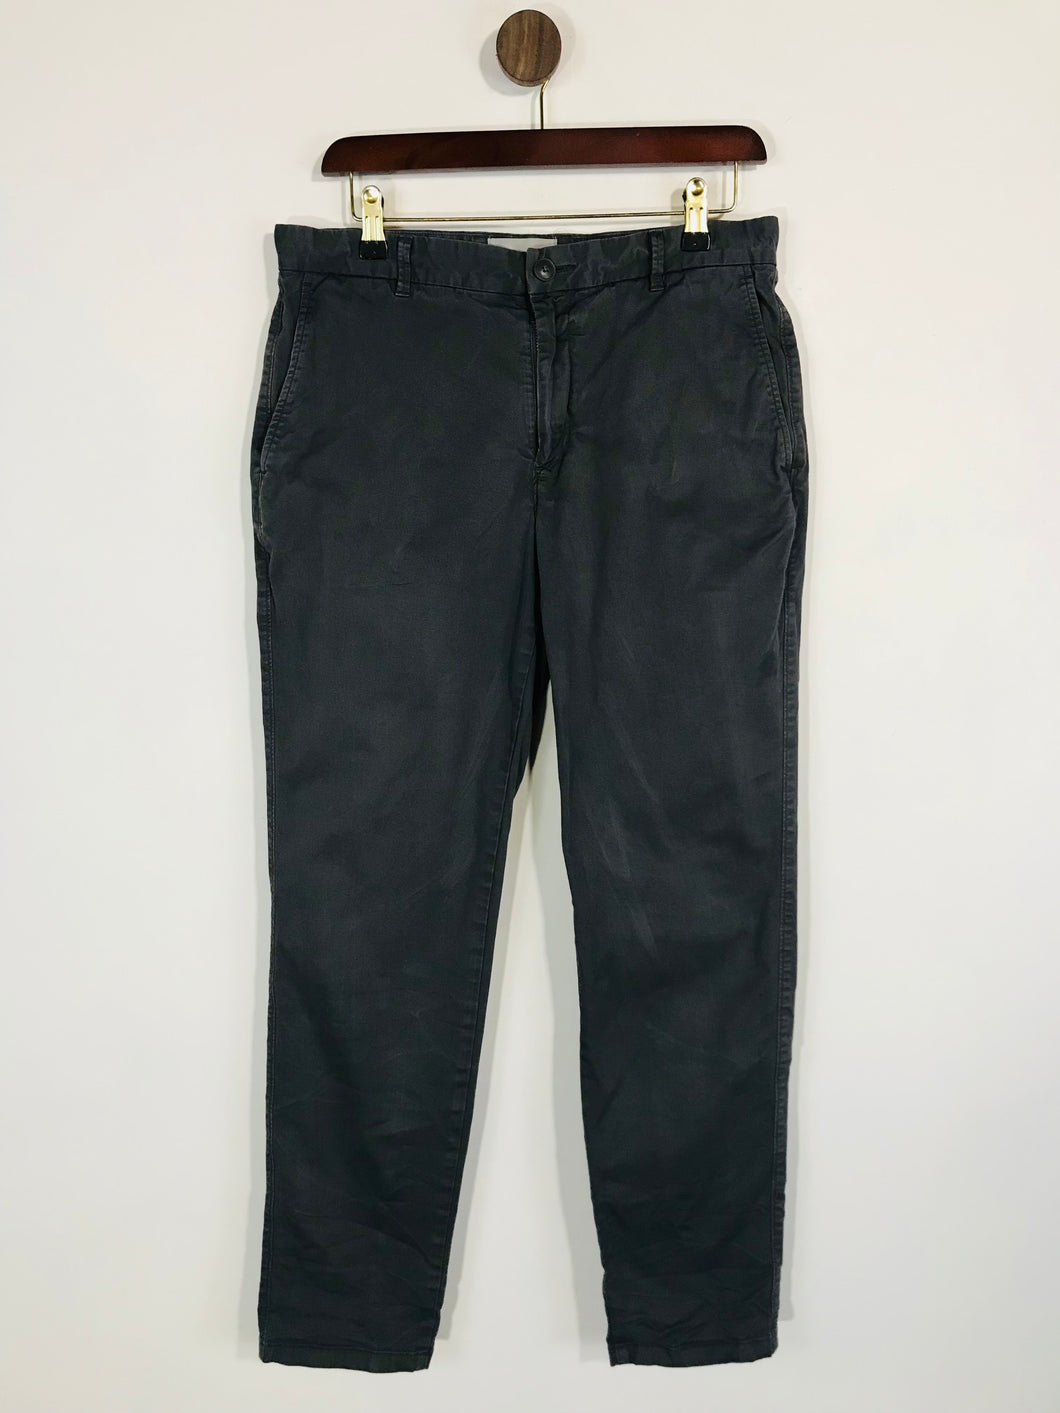 Everlane Men's Chinos Trousers | 31 x 30 | Grey